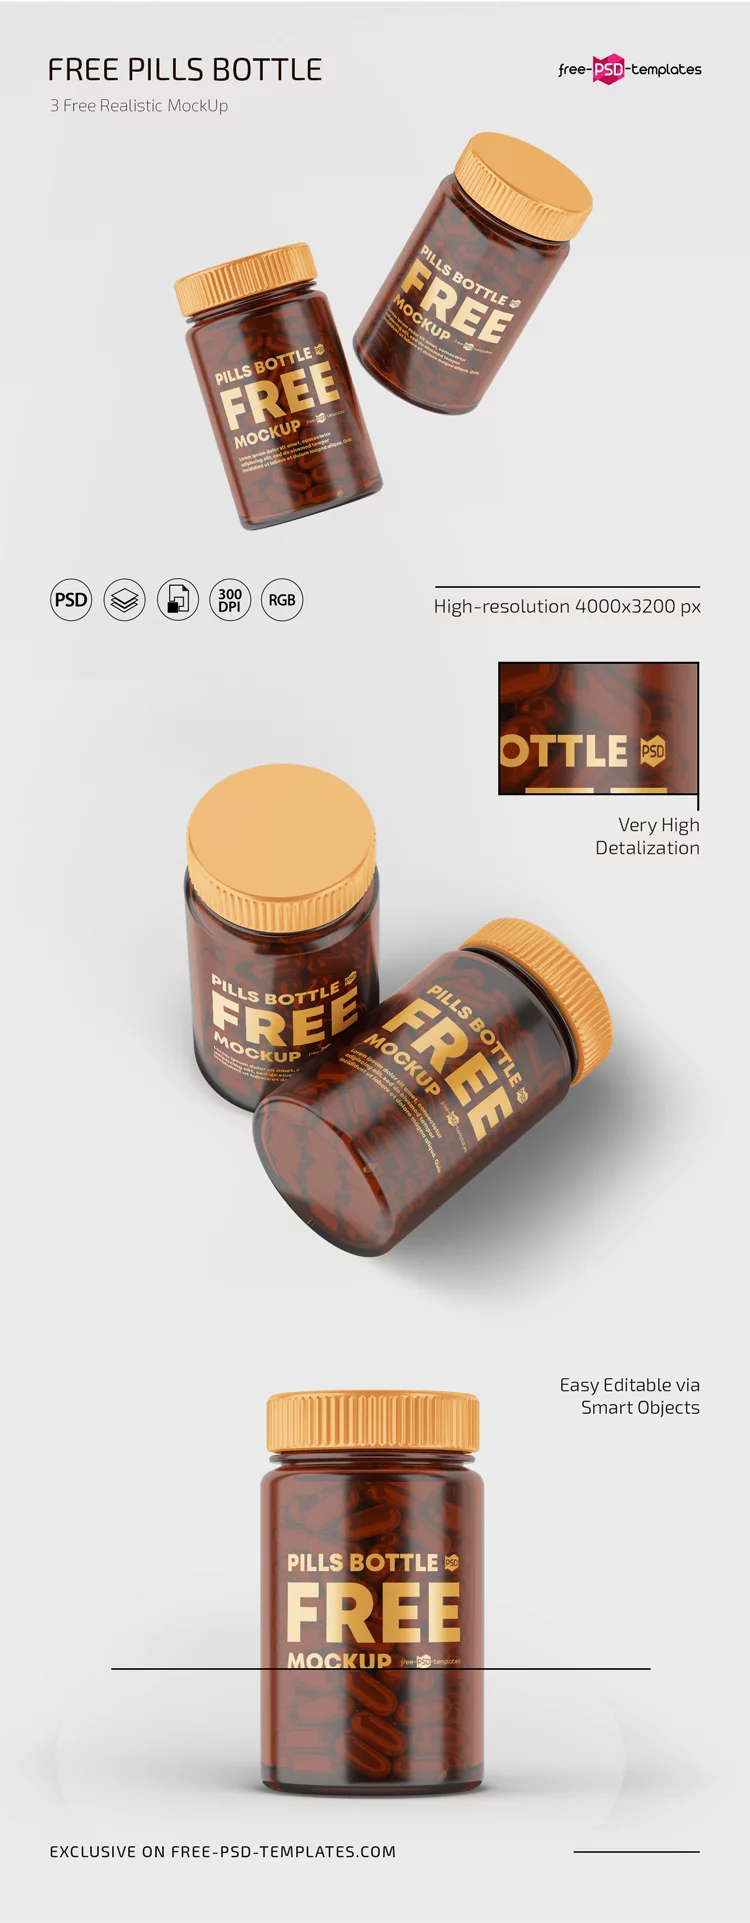 Free Pill Bottle Mockup Set Template